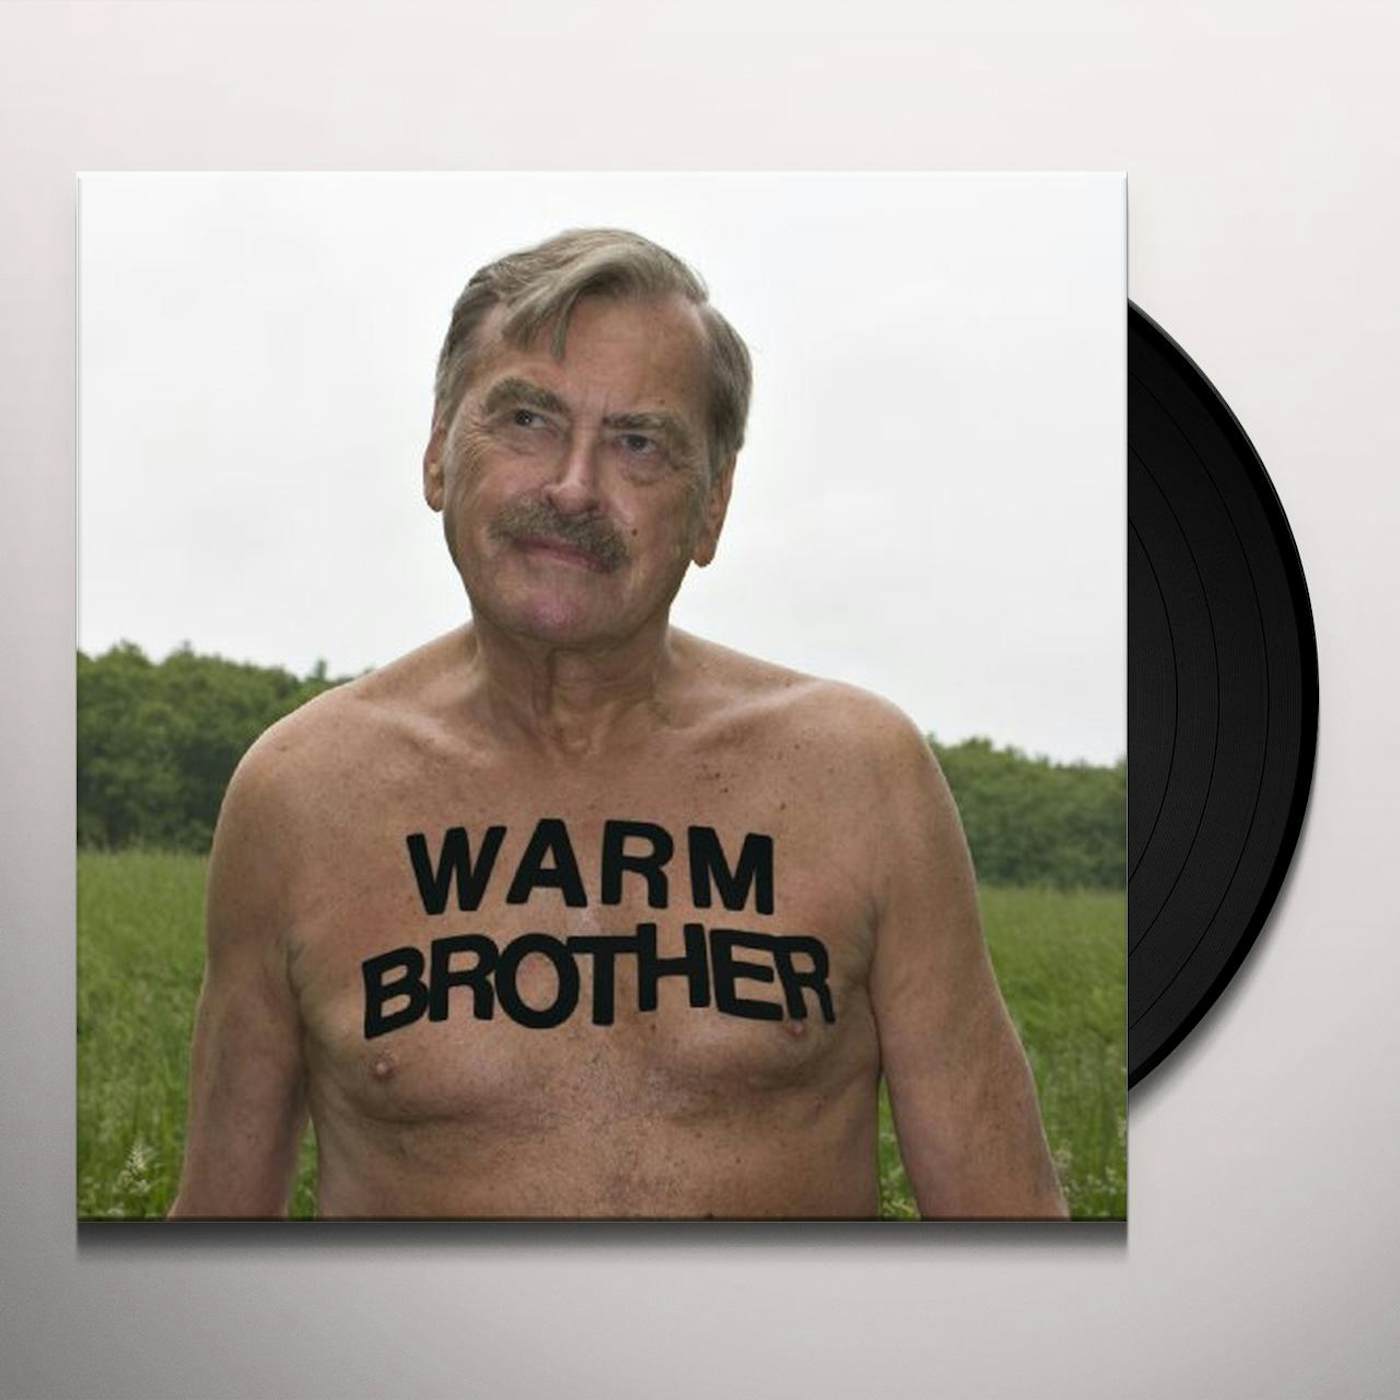 Digital Leather Warm Brother Vinyl Record